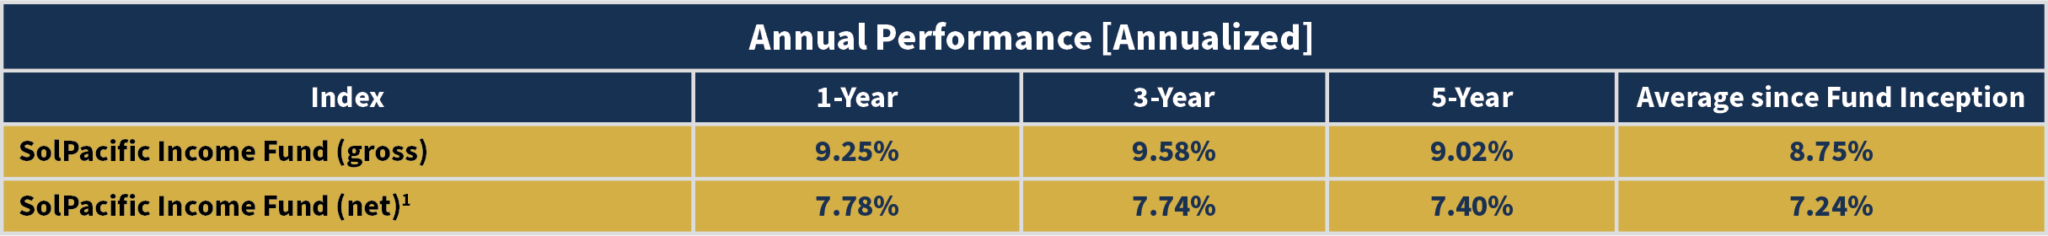 spif annual performance data